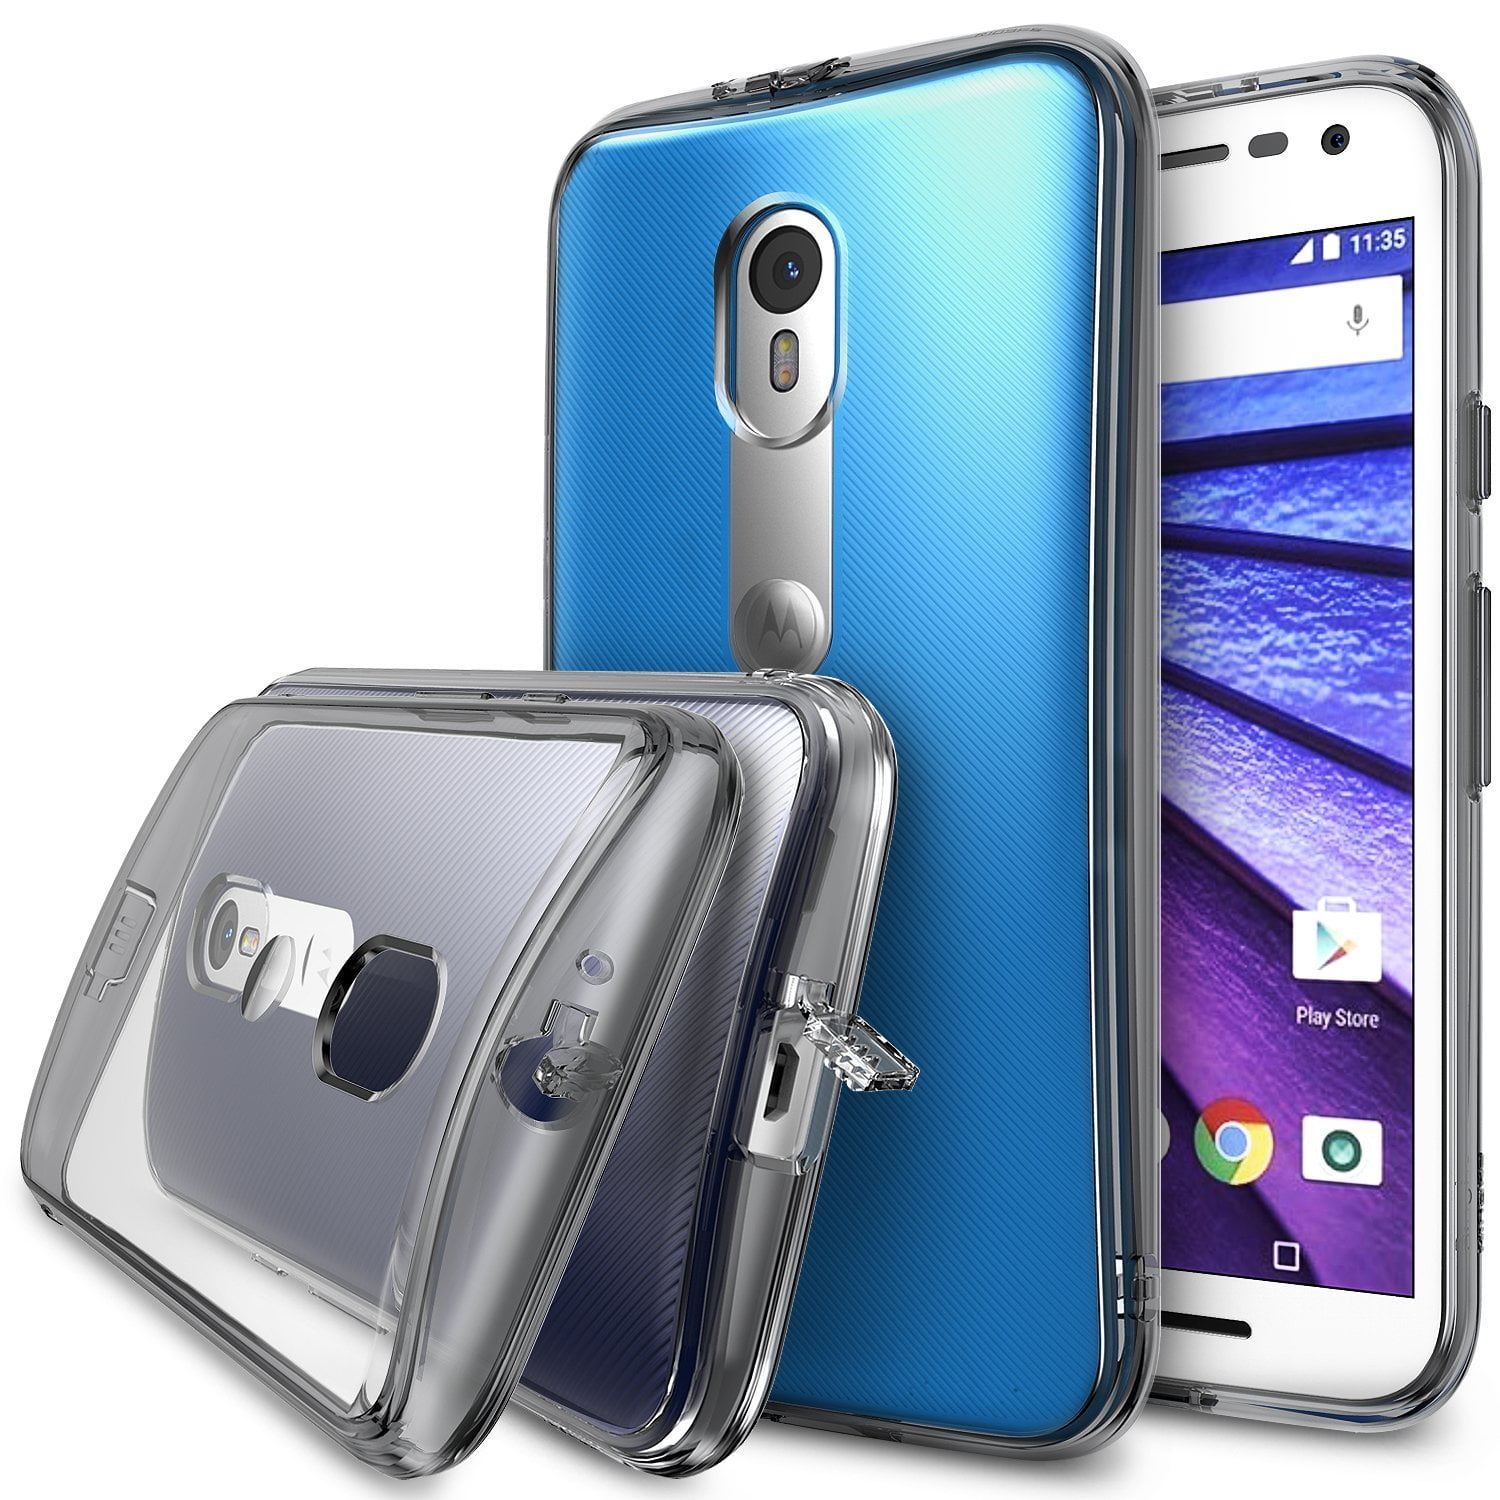 Ringke Fusion Case Compatible with Motorola Moto G 2015, Transparent PC TPU Bumper Drop Protection Phone Cover - Smoke Black - Walmart.com